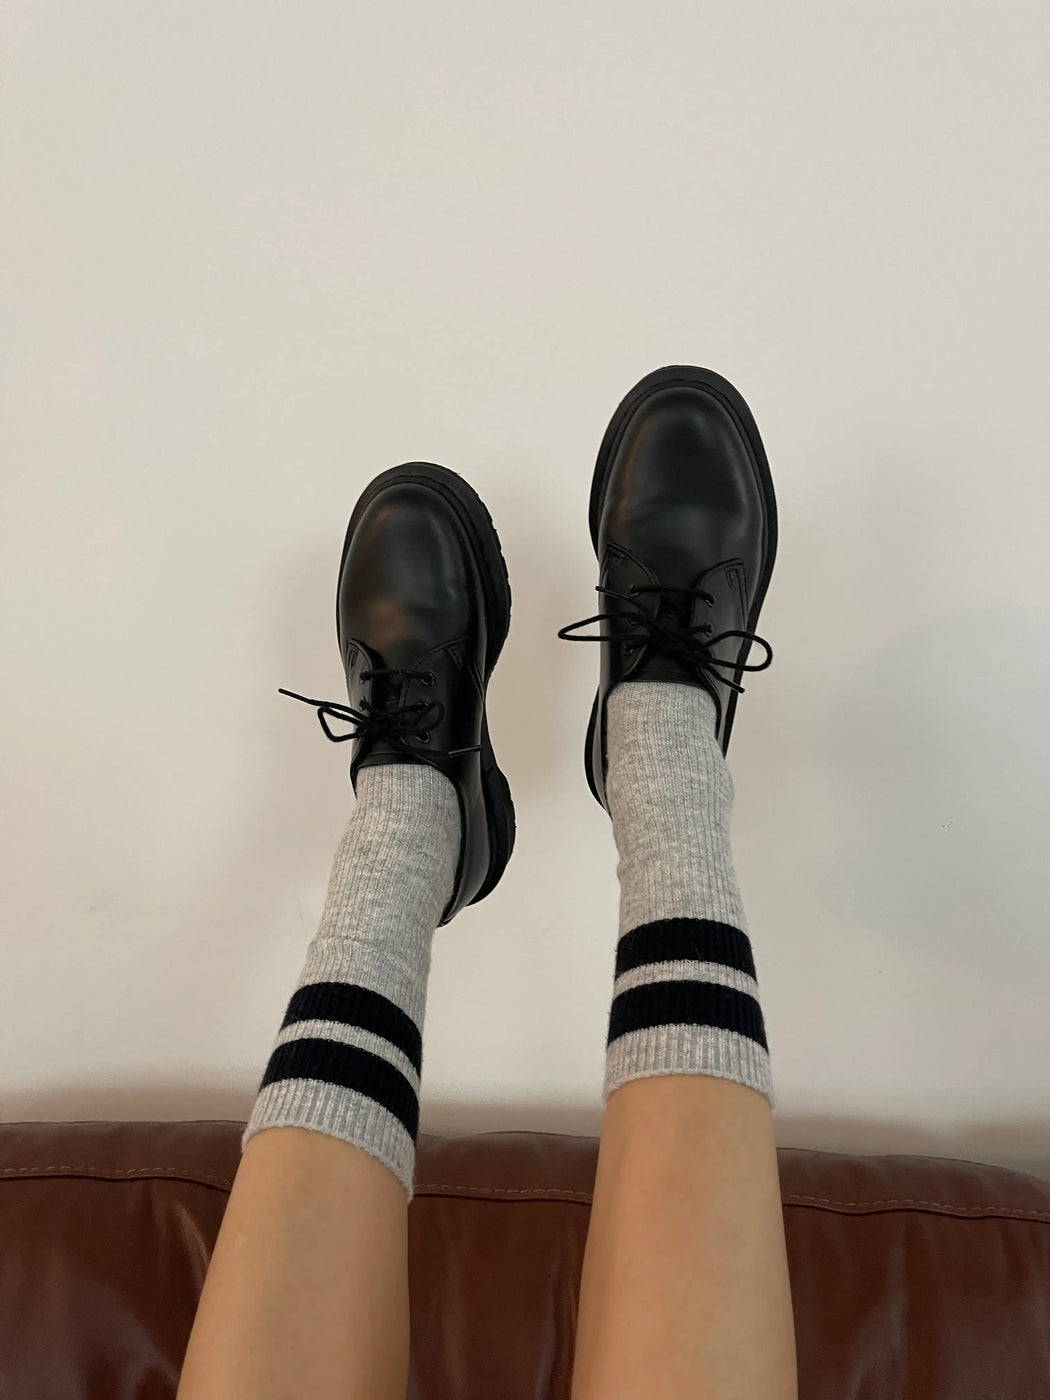 Le Bon Shoppe - Grandpa Varsity Socks - Light Grey / Navy Stripe